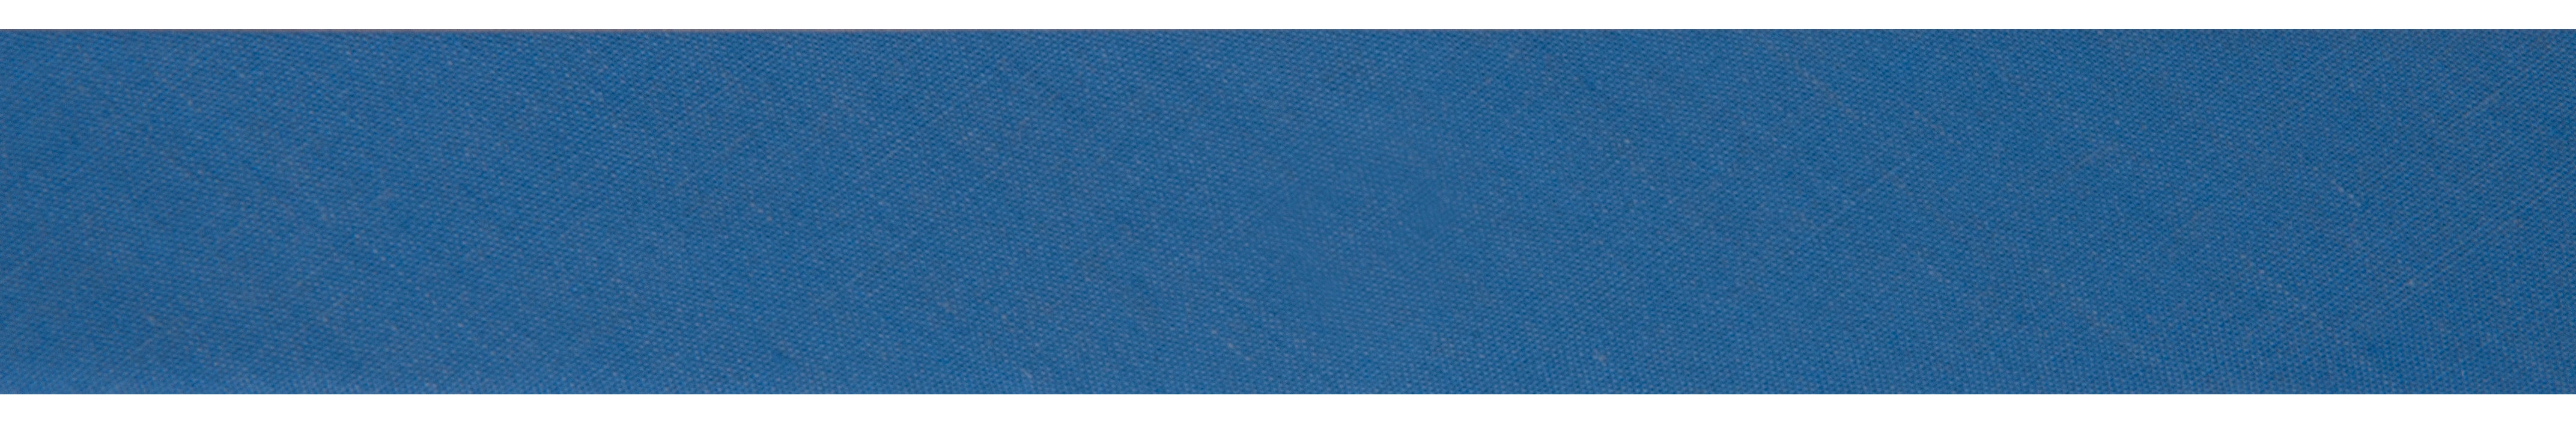 Wedgewood Blue Bias Binding | Narrow from Jaycotts Sewing Supplies